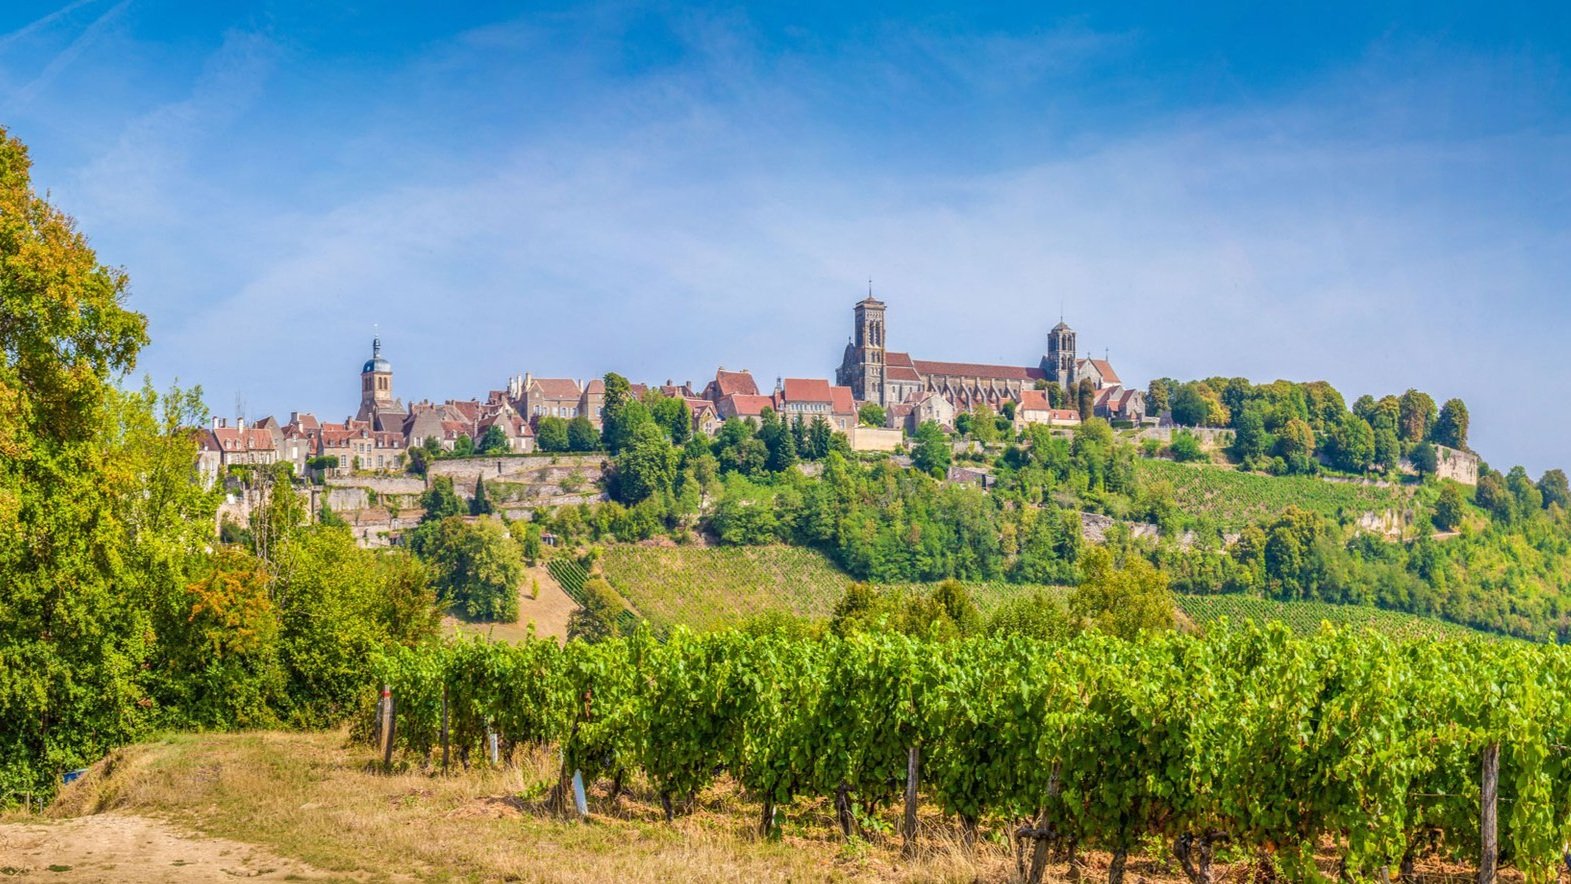 The view through the vineyards to Vézelay